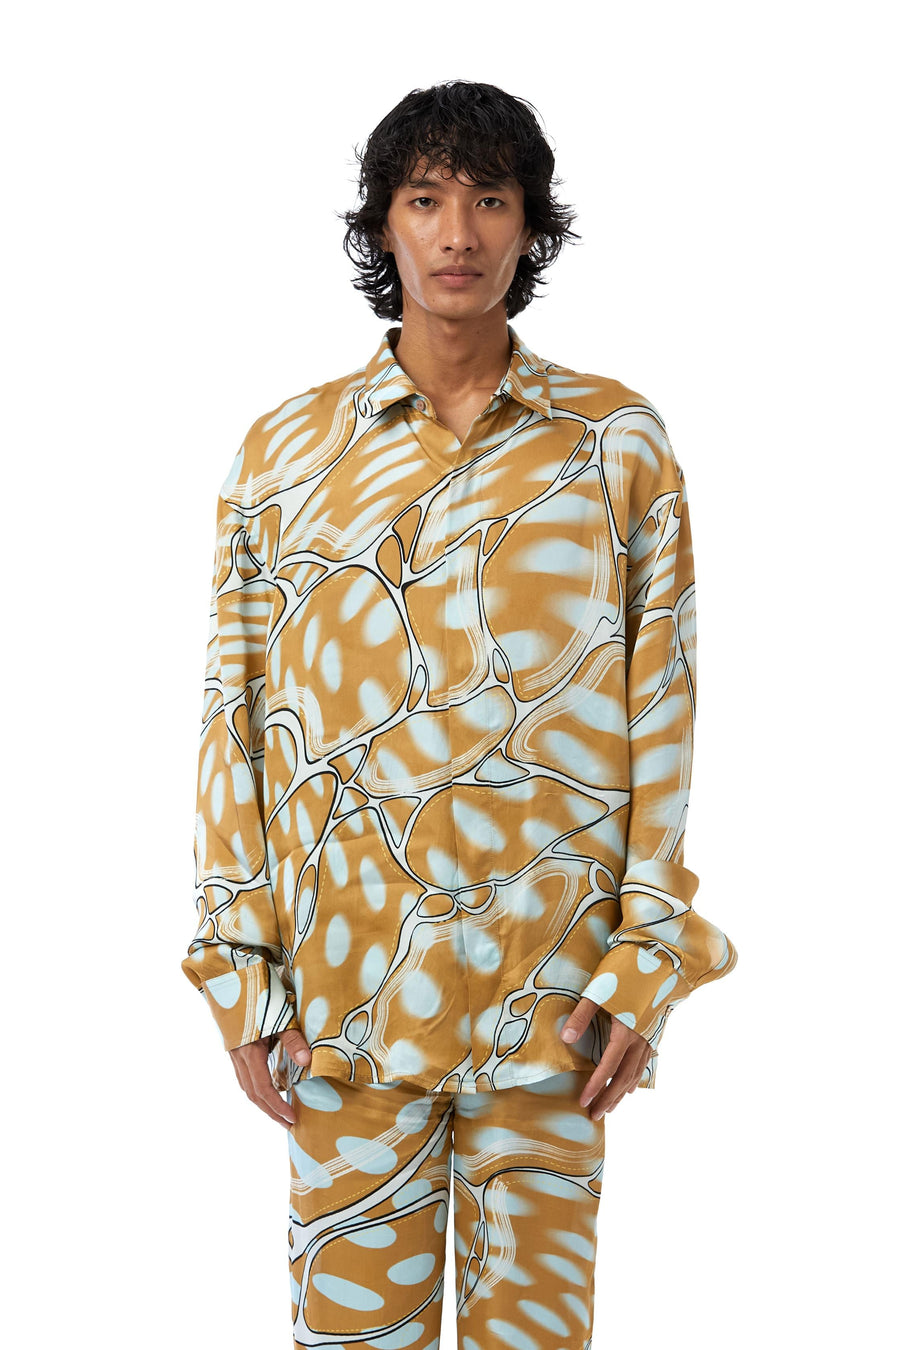 Muddy brown ripple shirt - Kanika Goyal Label